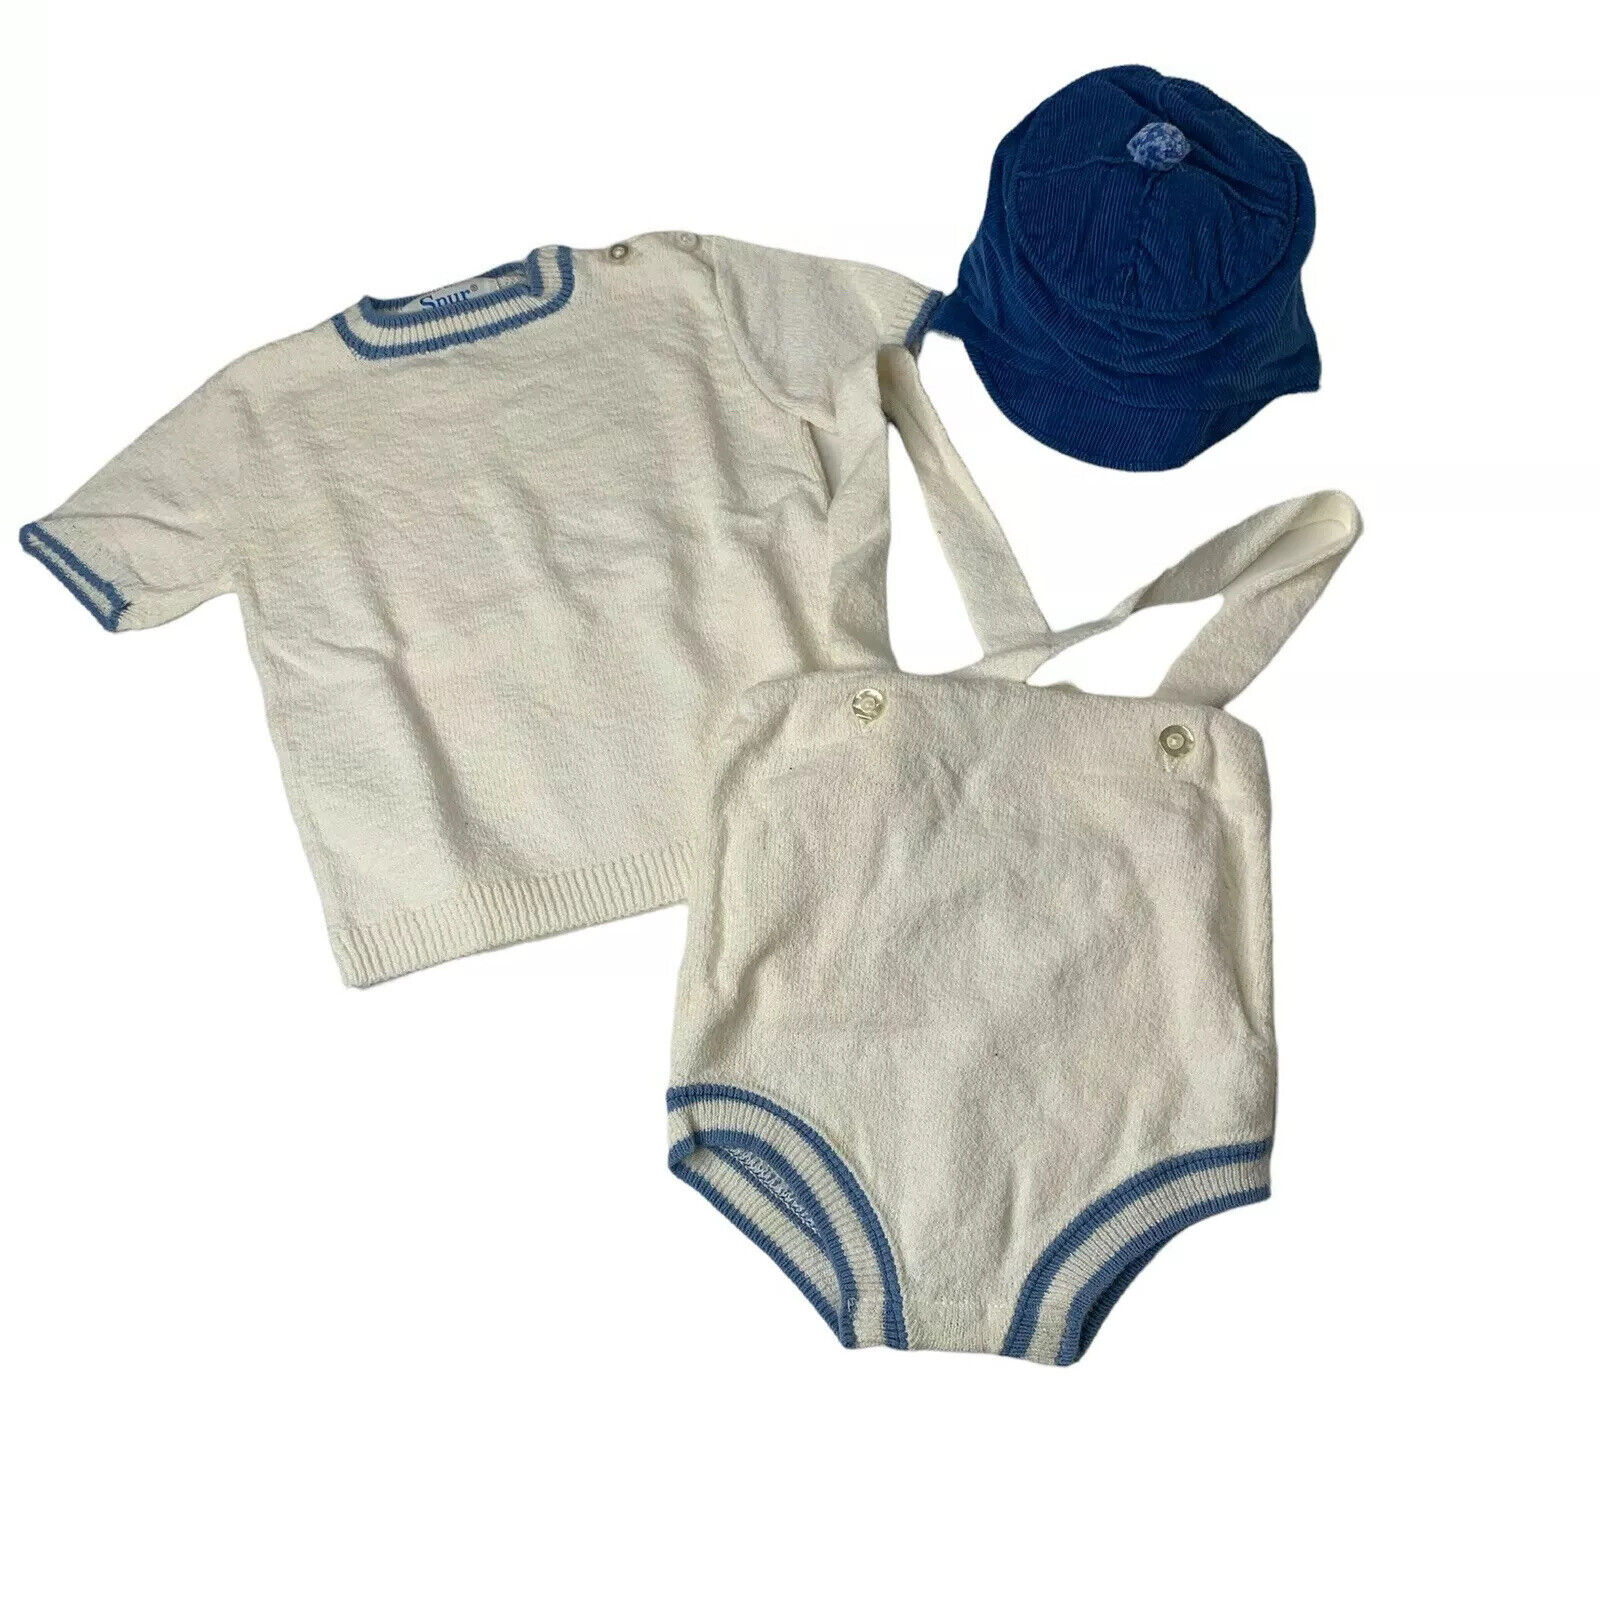 Vtg Boys Knit Romper Jon Jon 12 Month  Baby Outfit Suspenders Spur Boucle Read